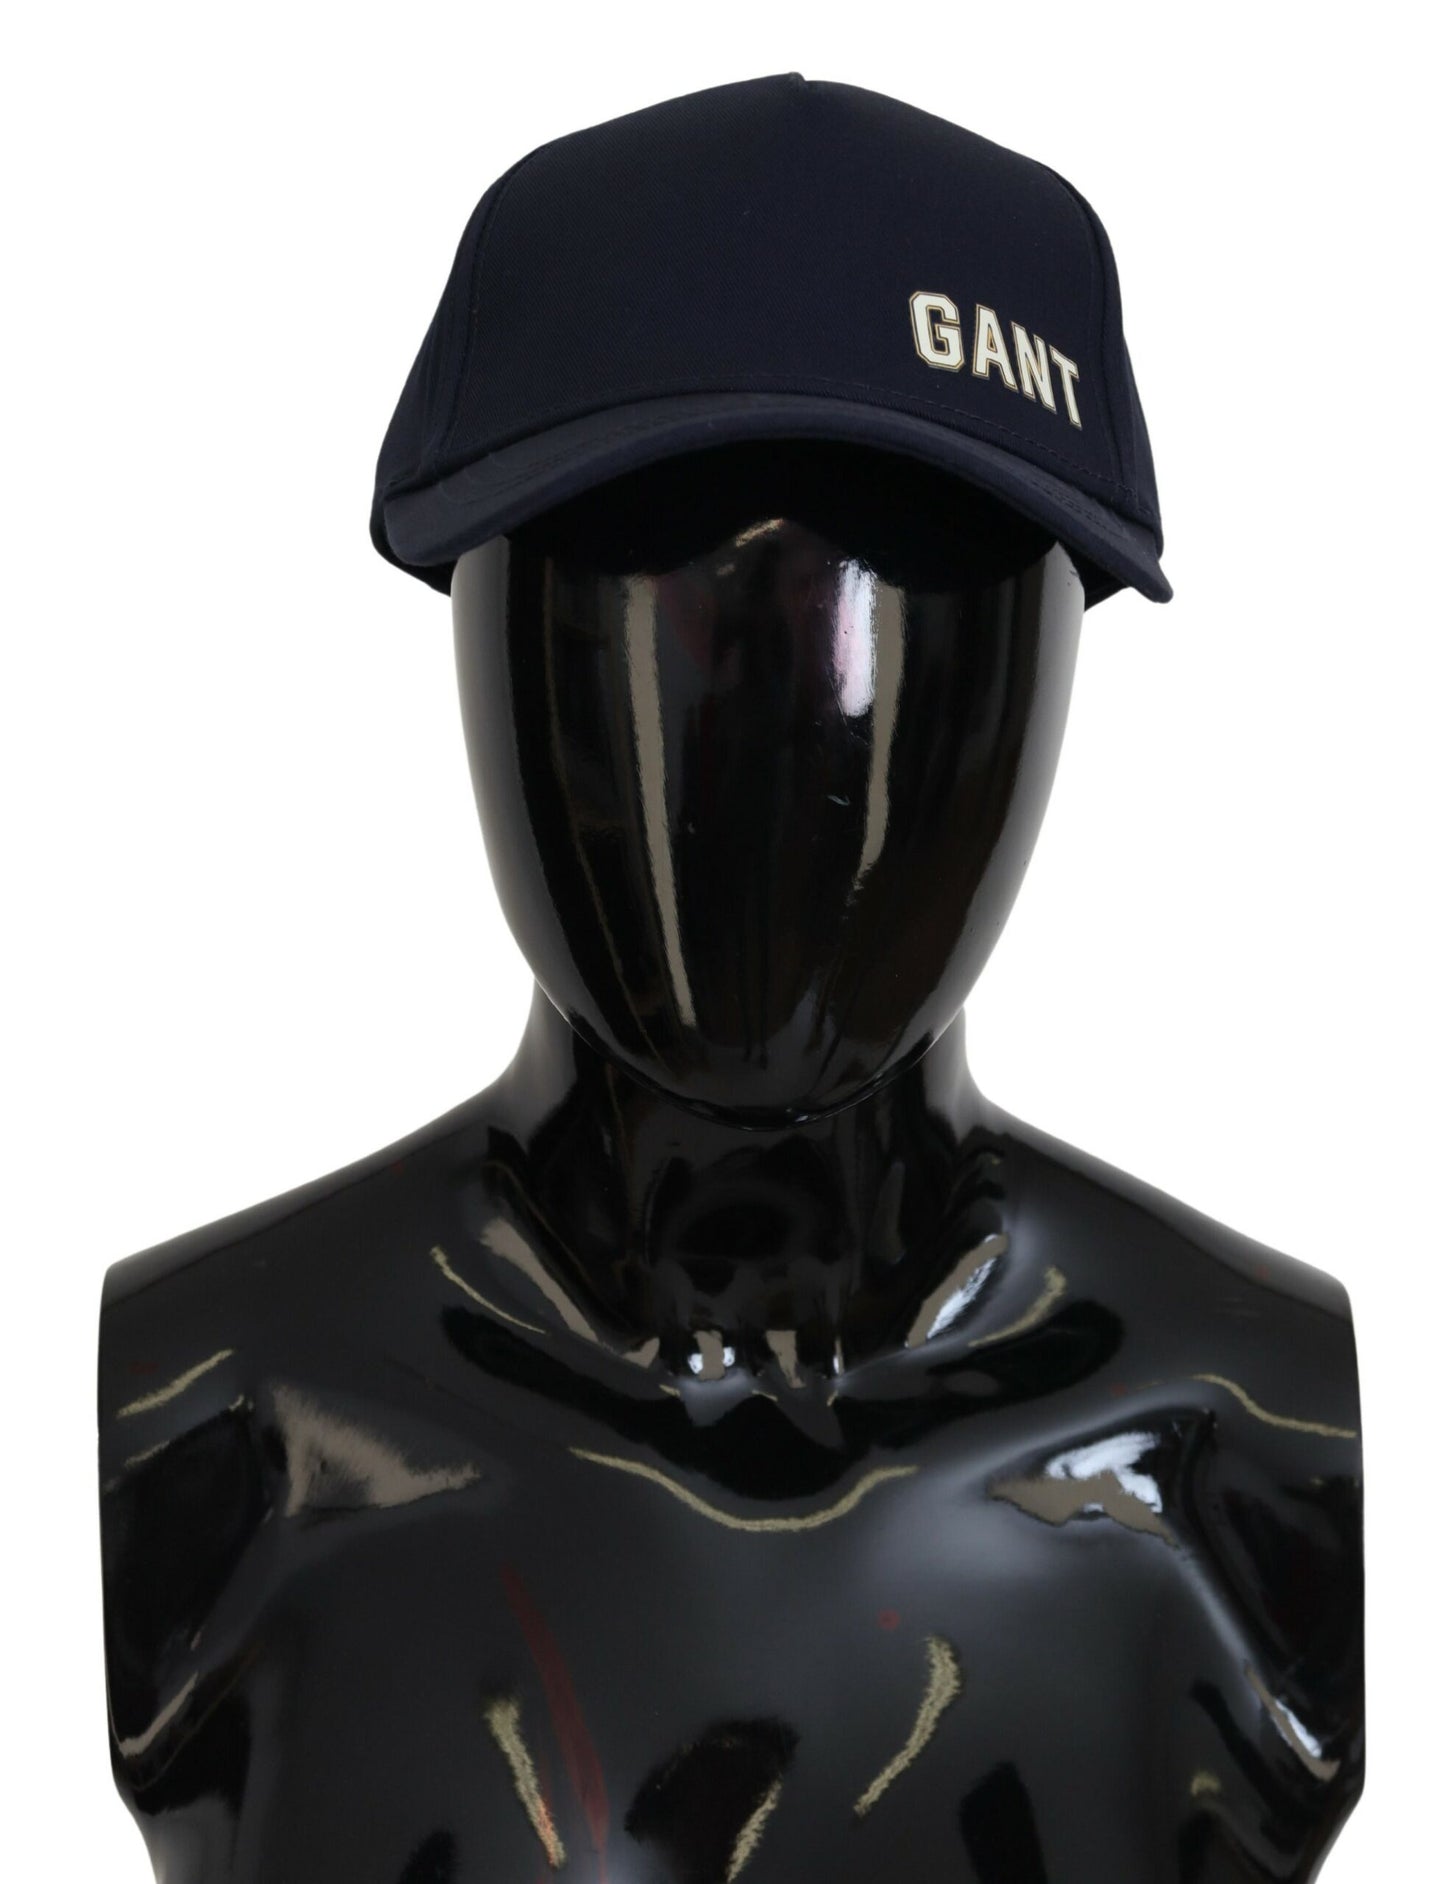 Gant Blue Cotton Logo Print Baseball Cap Casual Hat